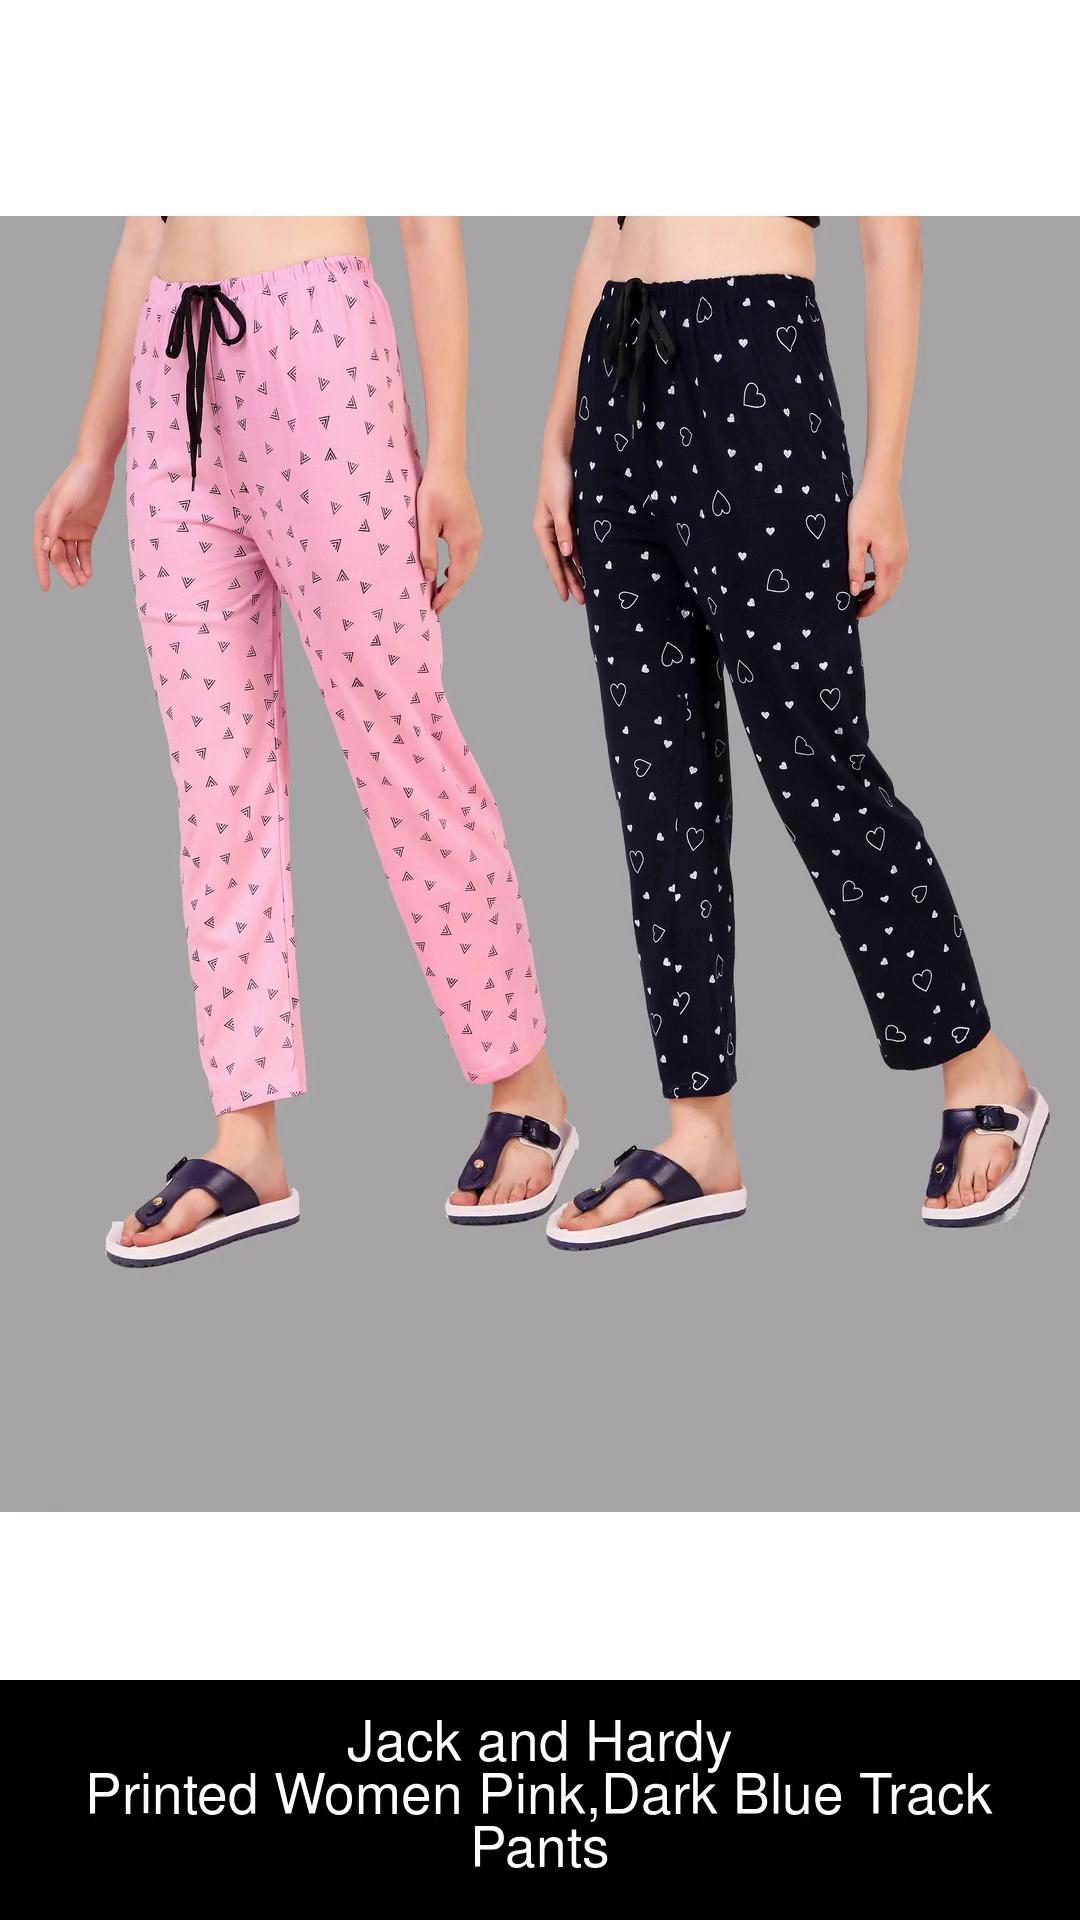 Buy Girls Pink Graphic Print Regular Fit Track Pants Online - 747385